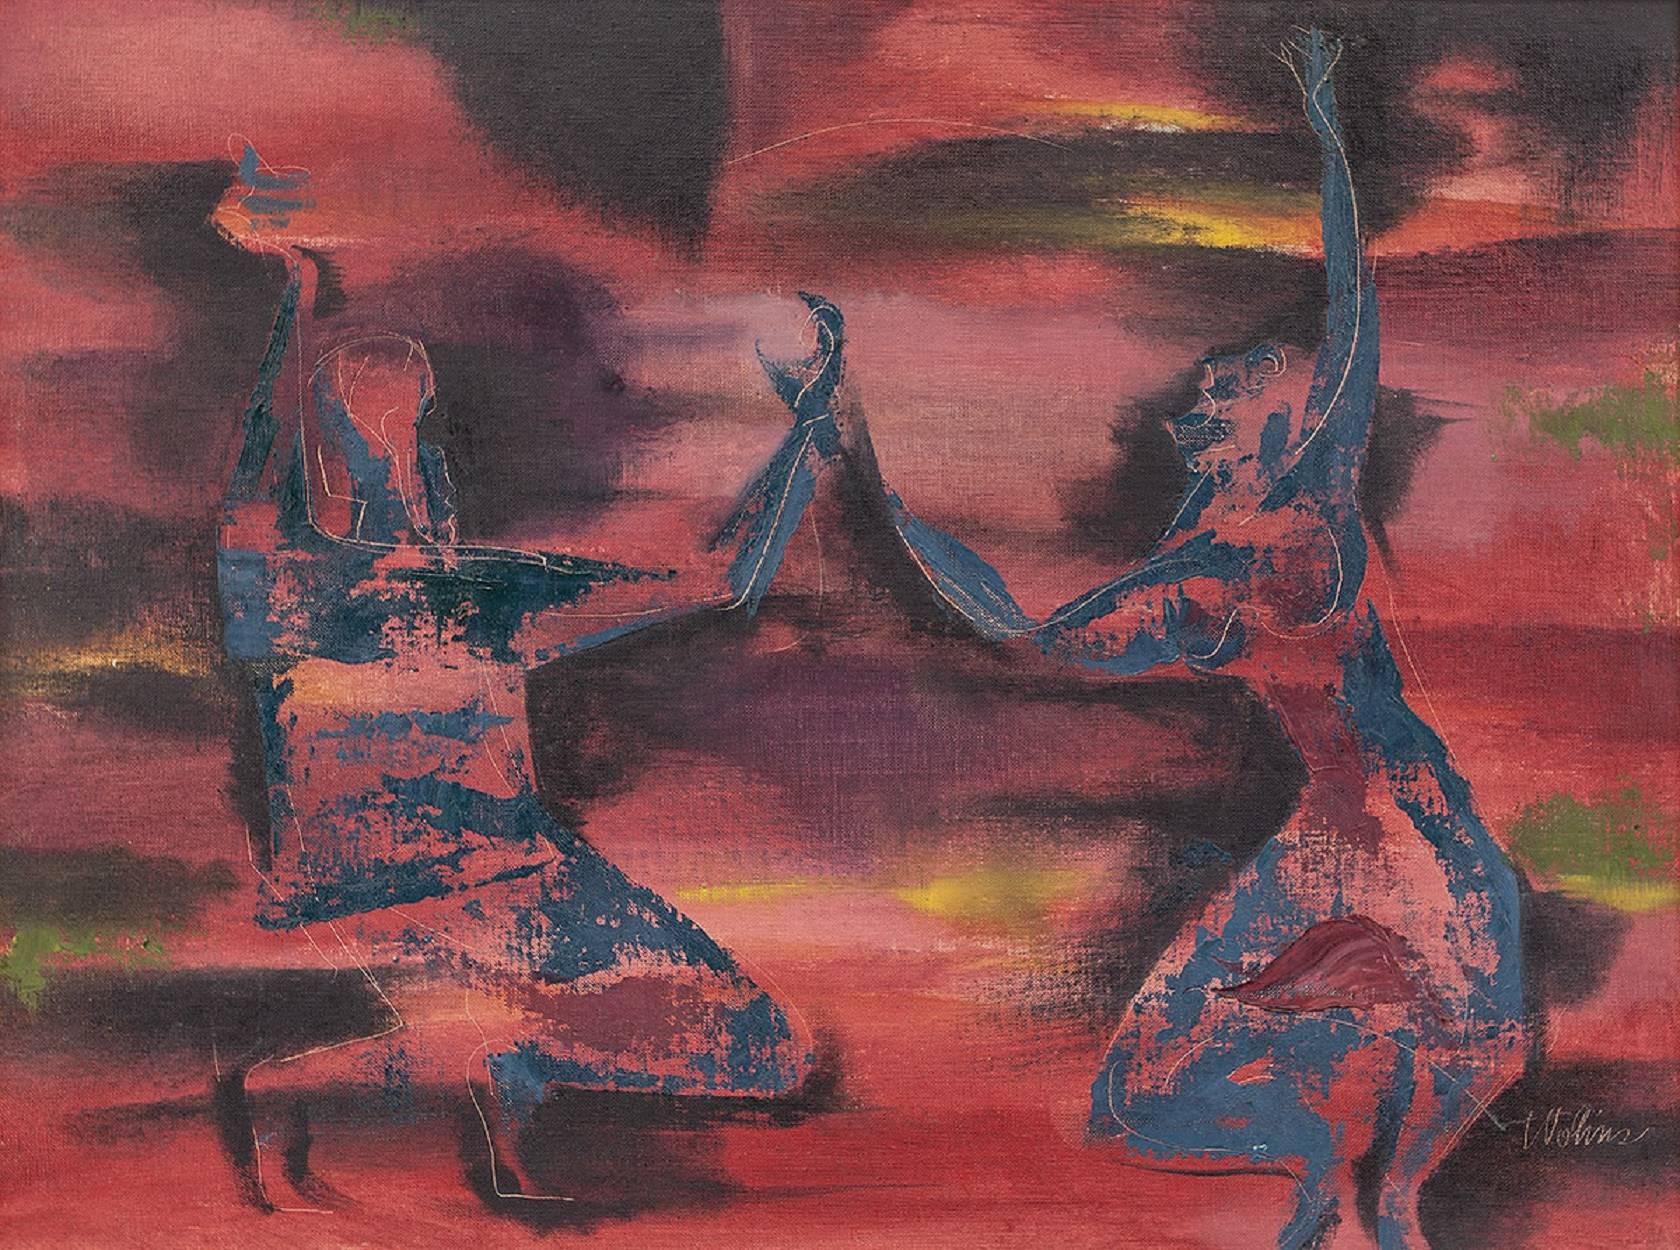 Figurative Painting Joseph Wolins - Tableau de danse moderniste israélien "Inbal Dancers at Midnight" (Danseurs d'Inbal à minuit)